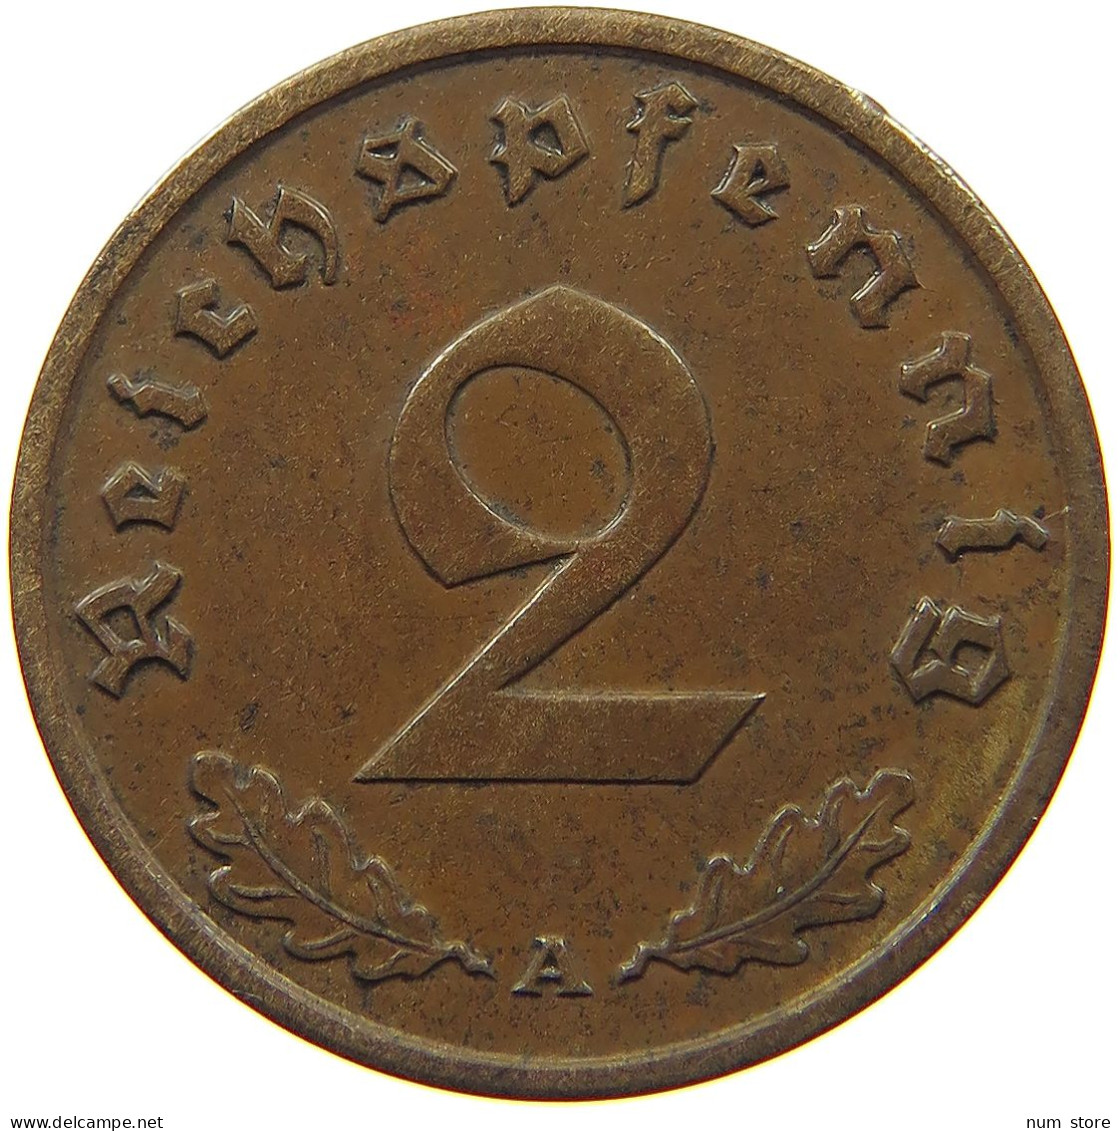 GERMANY 2 PFENNIG 1939 A #c081 0275 - 2 Reichspfennig